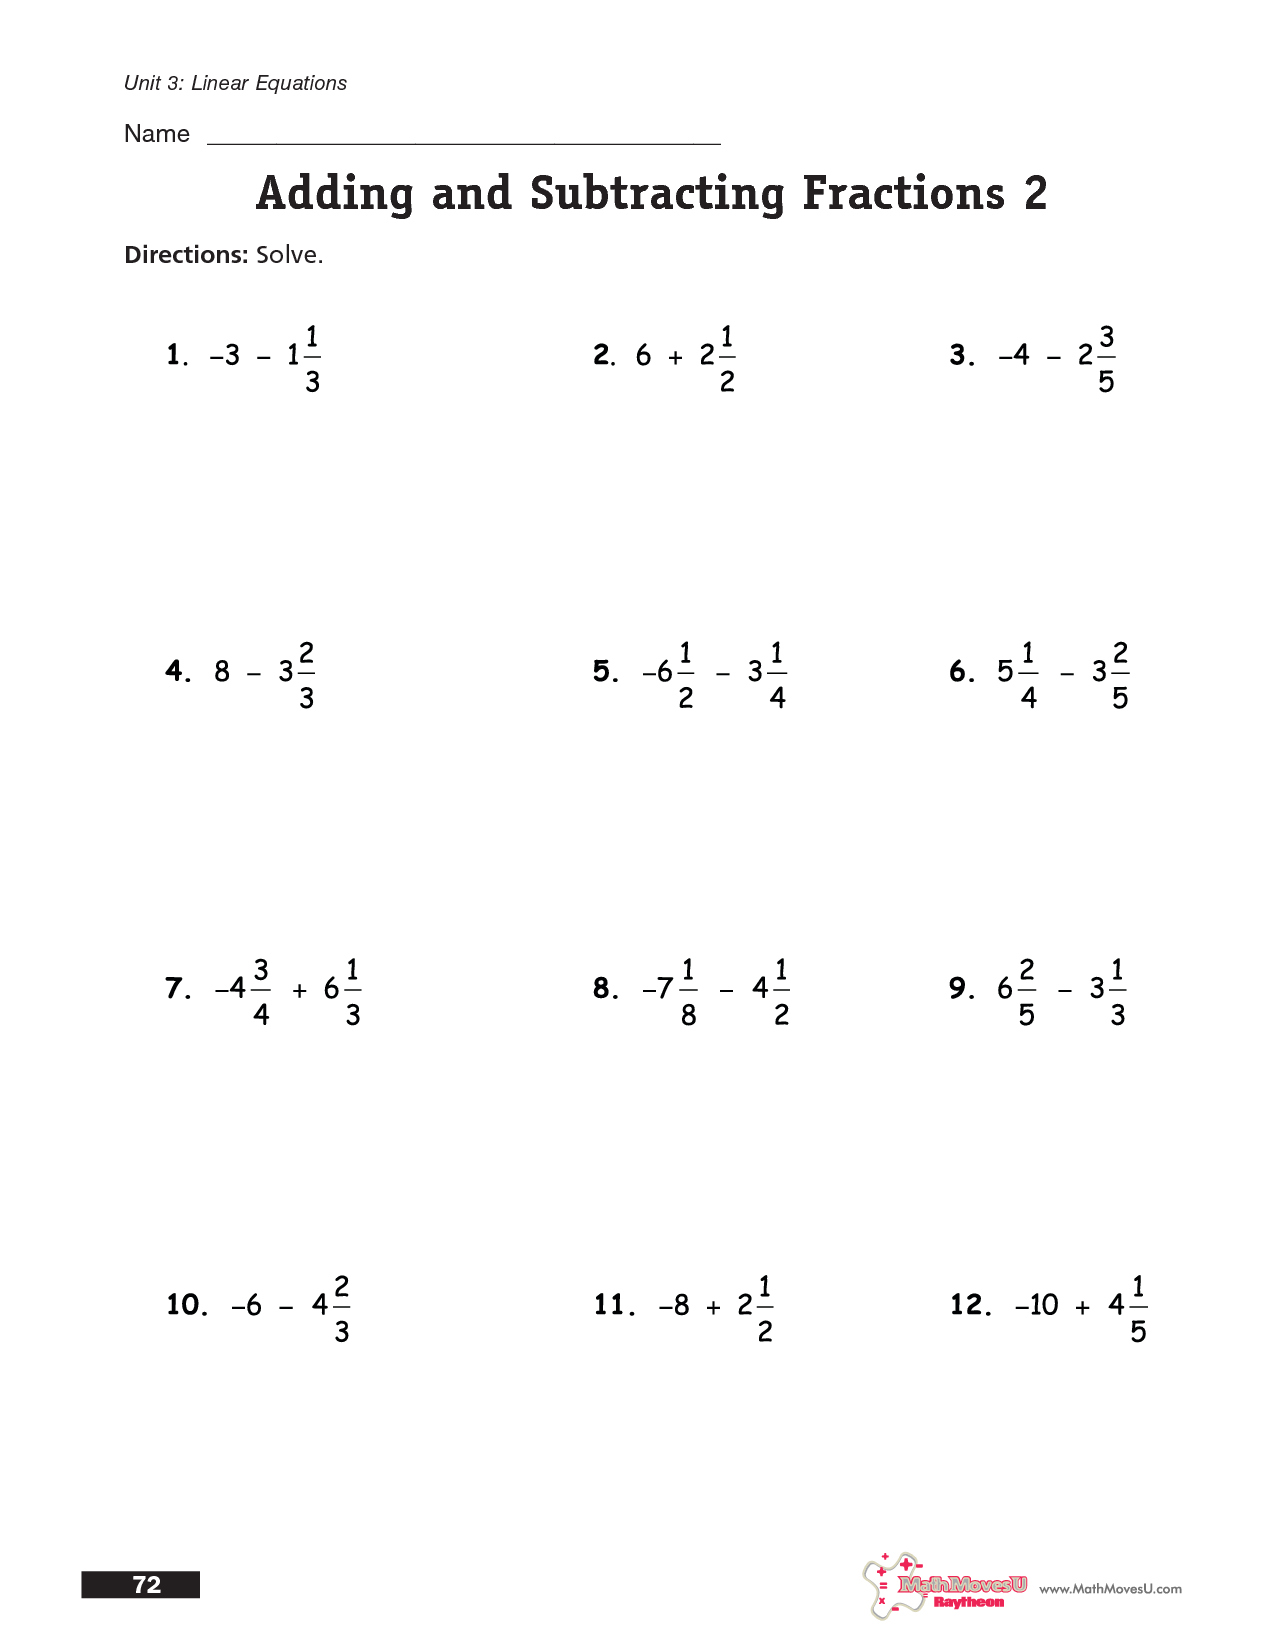 Subtracting Fractions with Unlike Denominators Worksheet Image